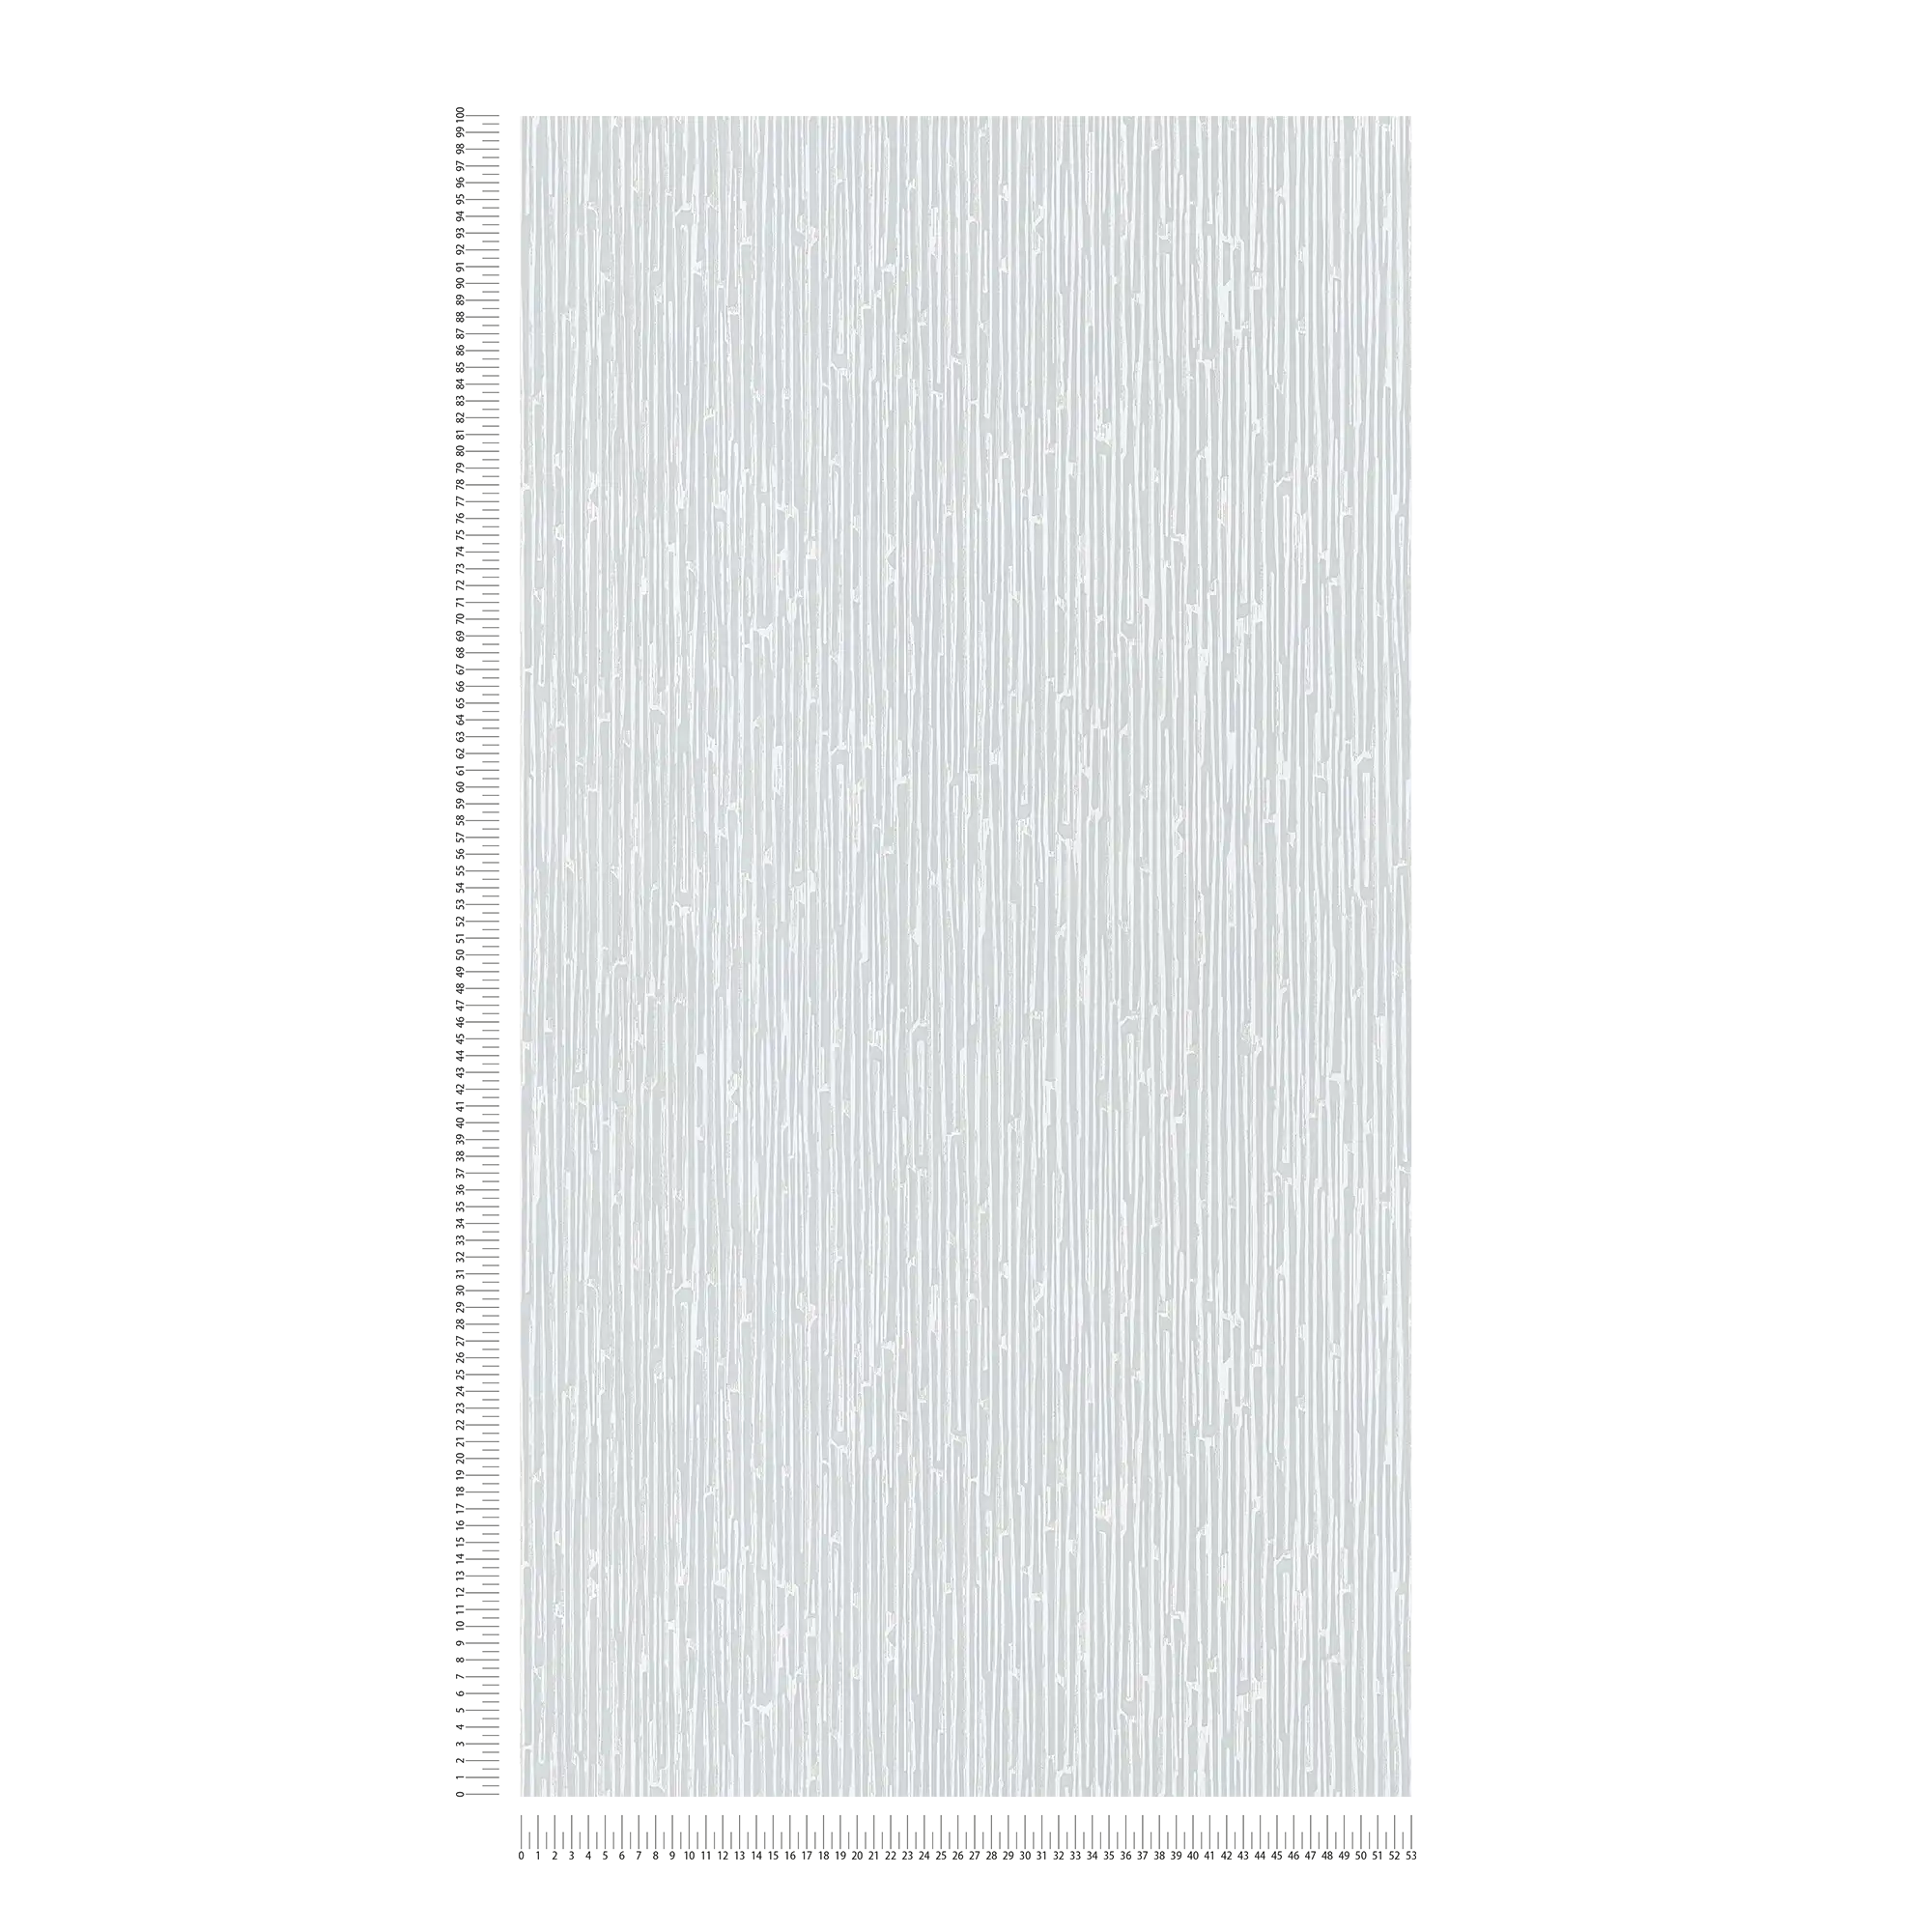             Mustertapete Grau mit Prägestruktur & abstraktem Muster
        